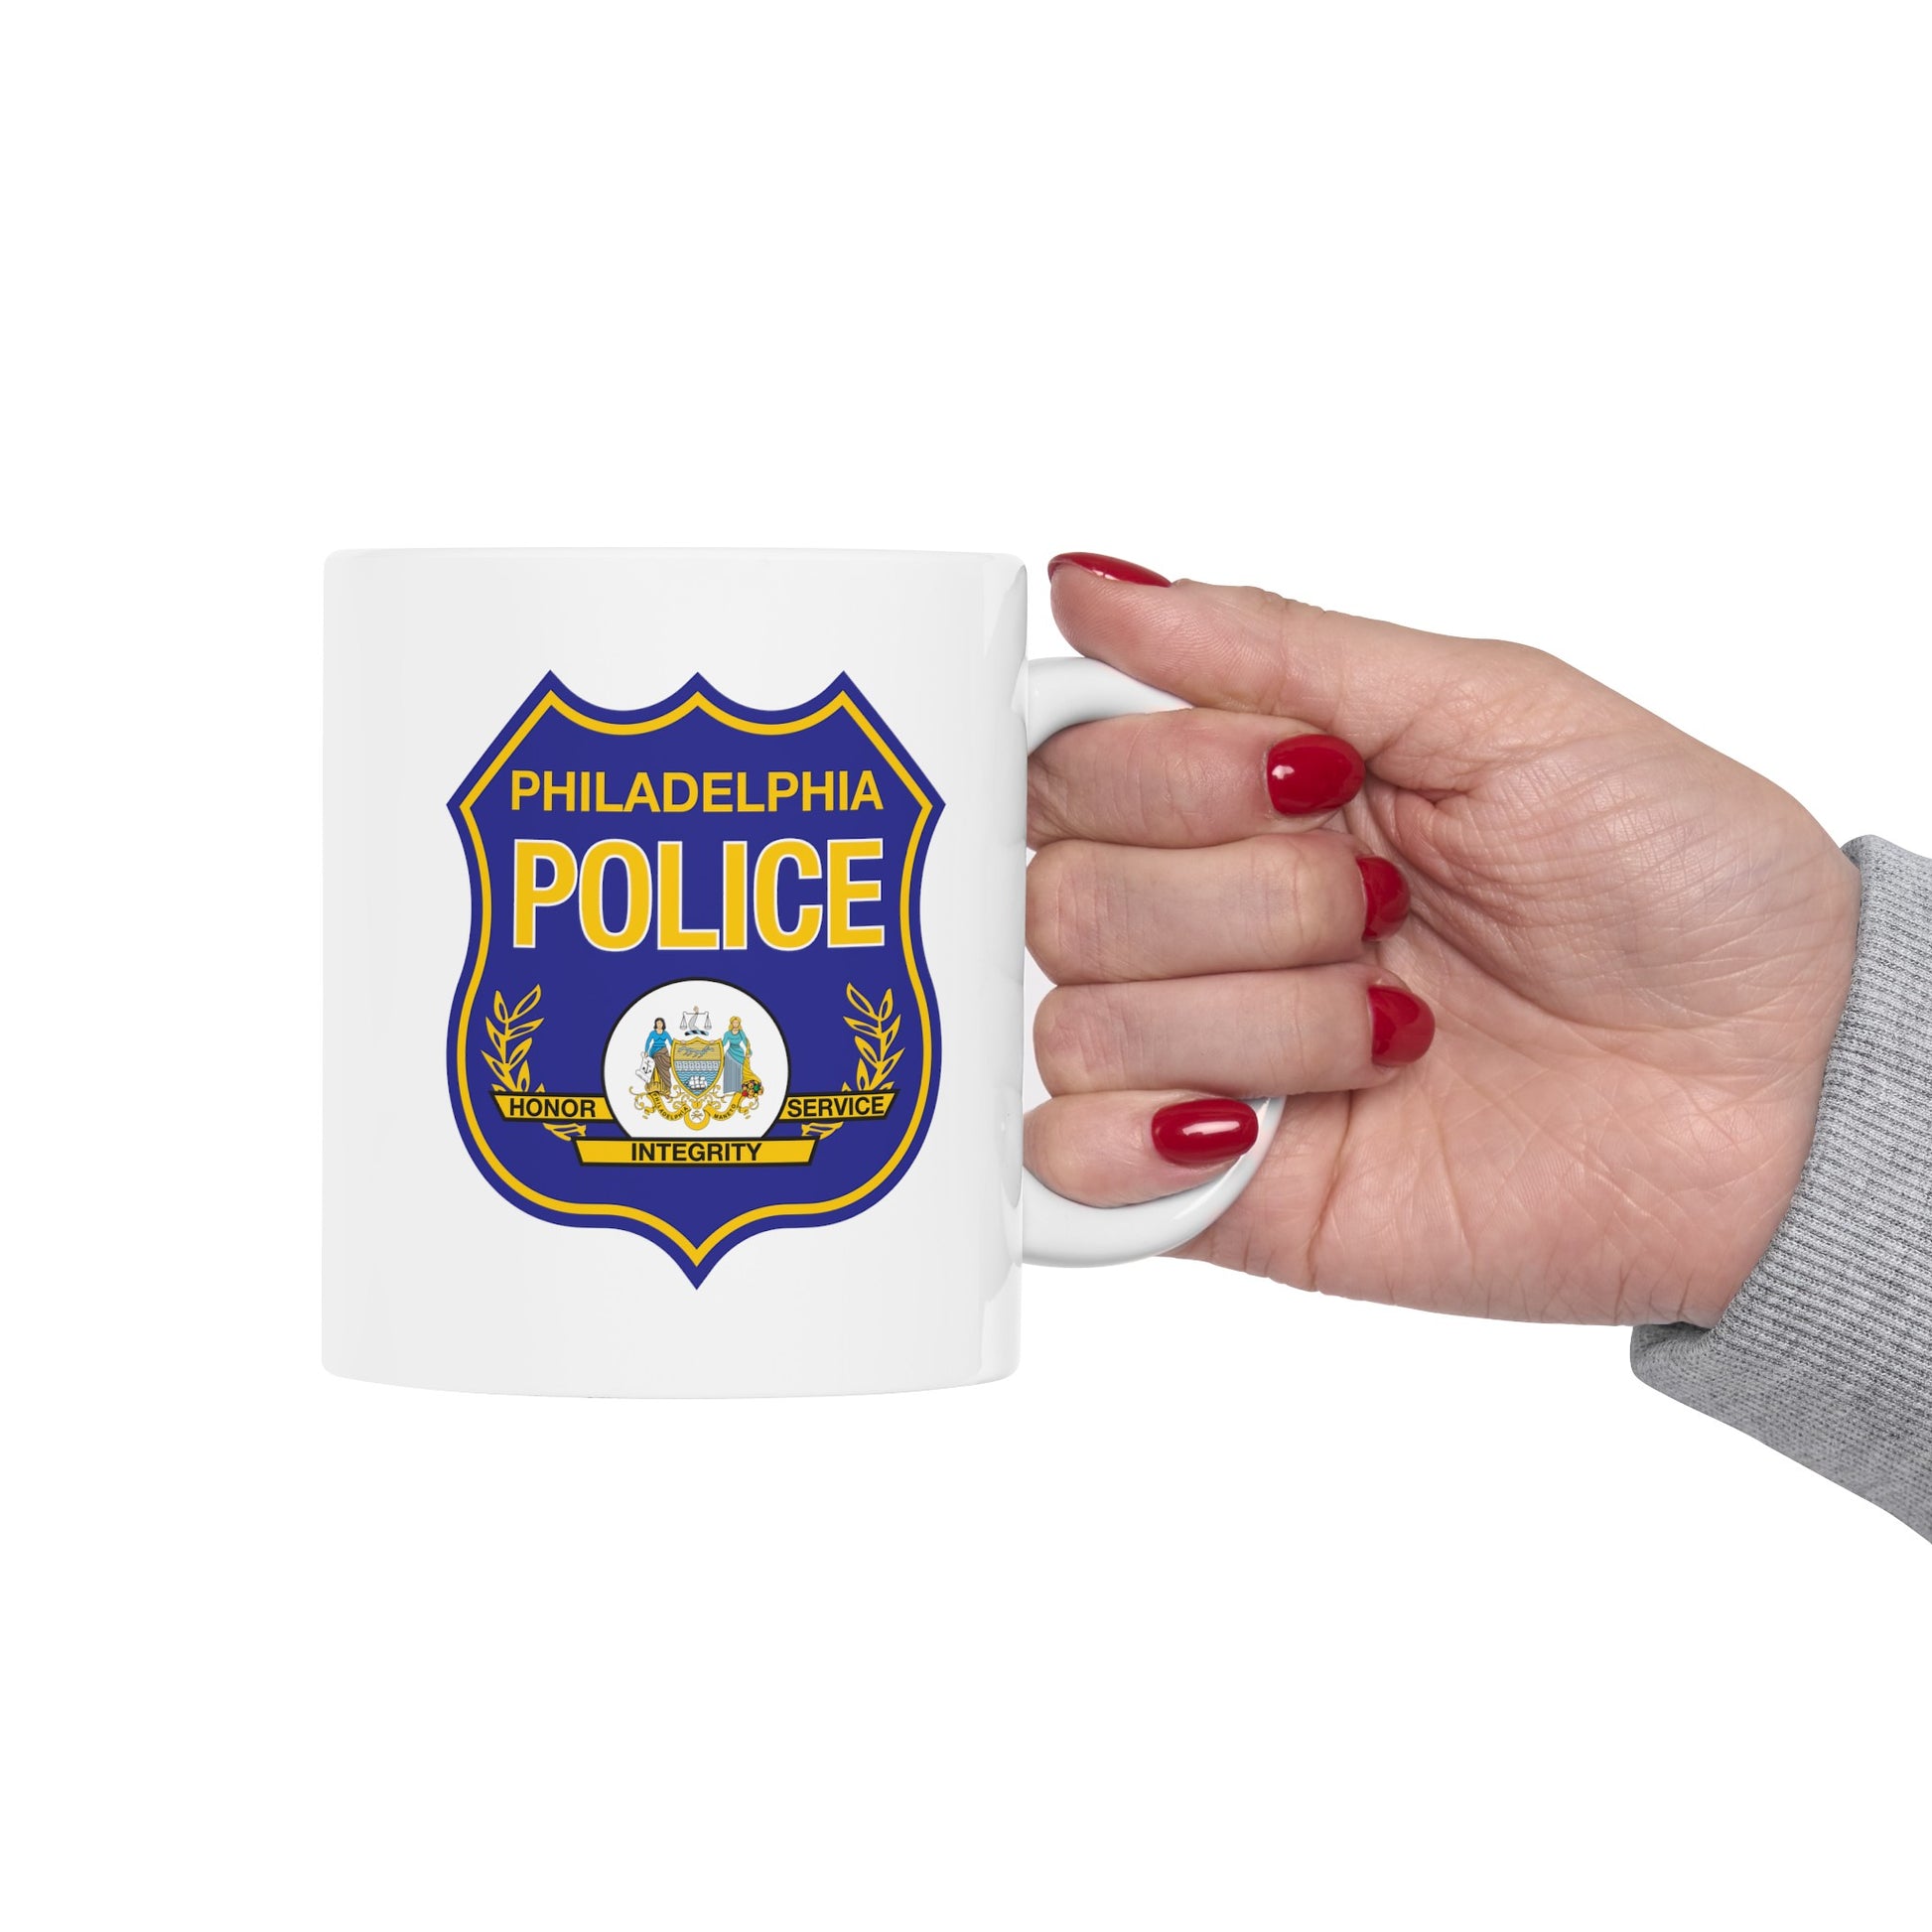 Philadelphia Police Coffee Mug - Double Sided White Ceramic 11oz by TheGlassyLass.com